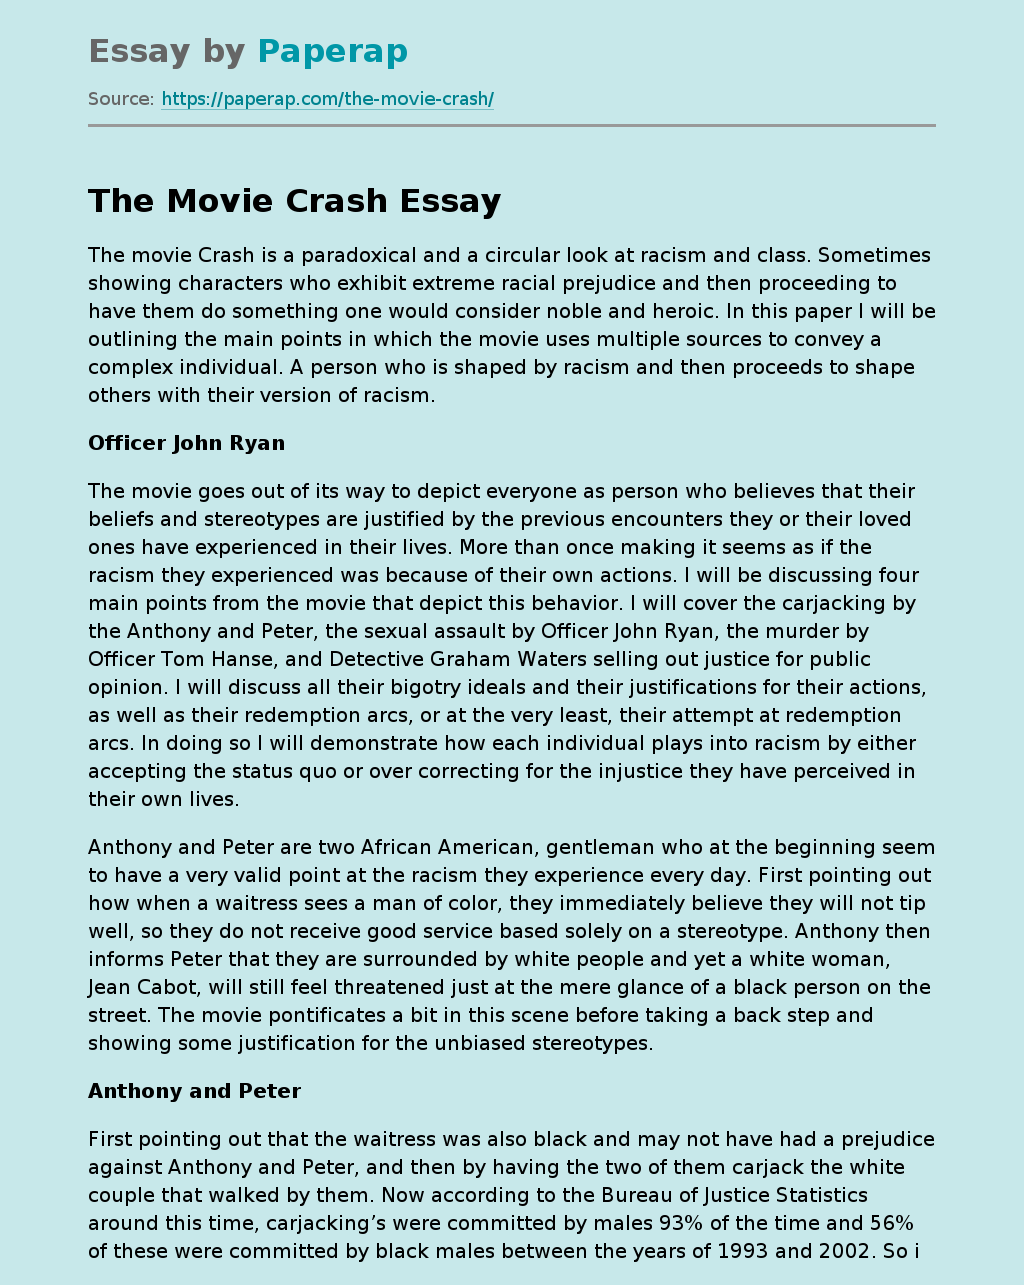 The Movie Crash